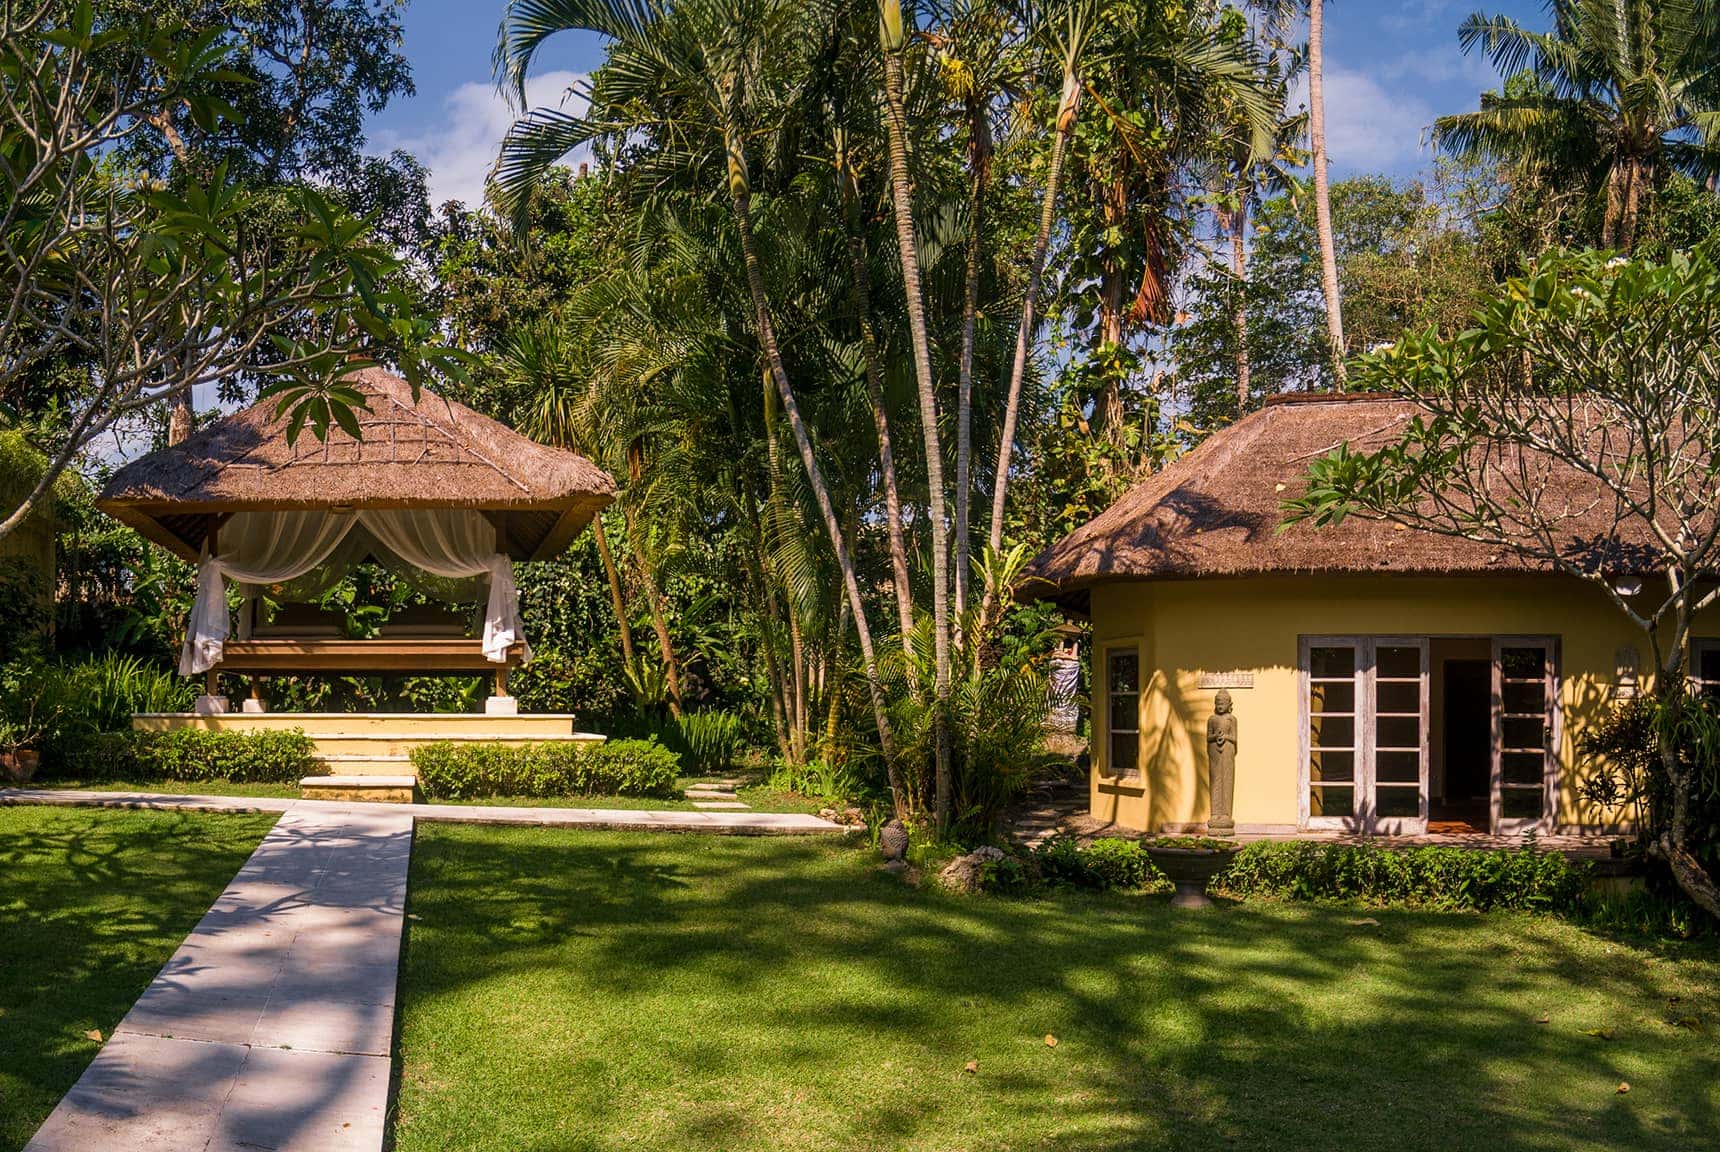 Villa Banyan Estate - Umalas, Bali Indonesia (Bali villa photography by master photographer Rick Carmichael of LuxViz)